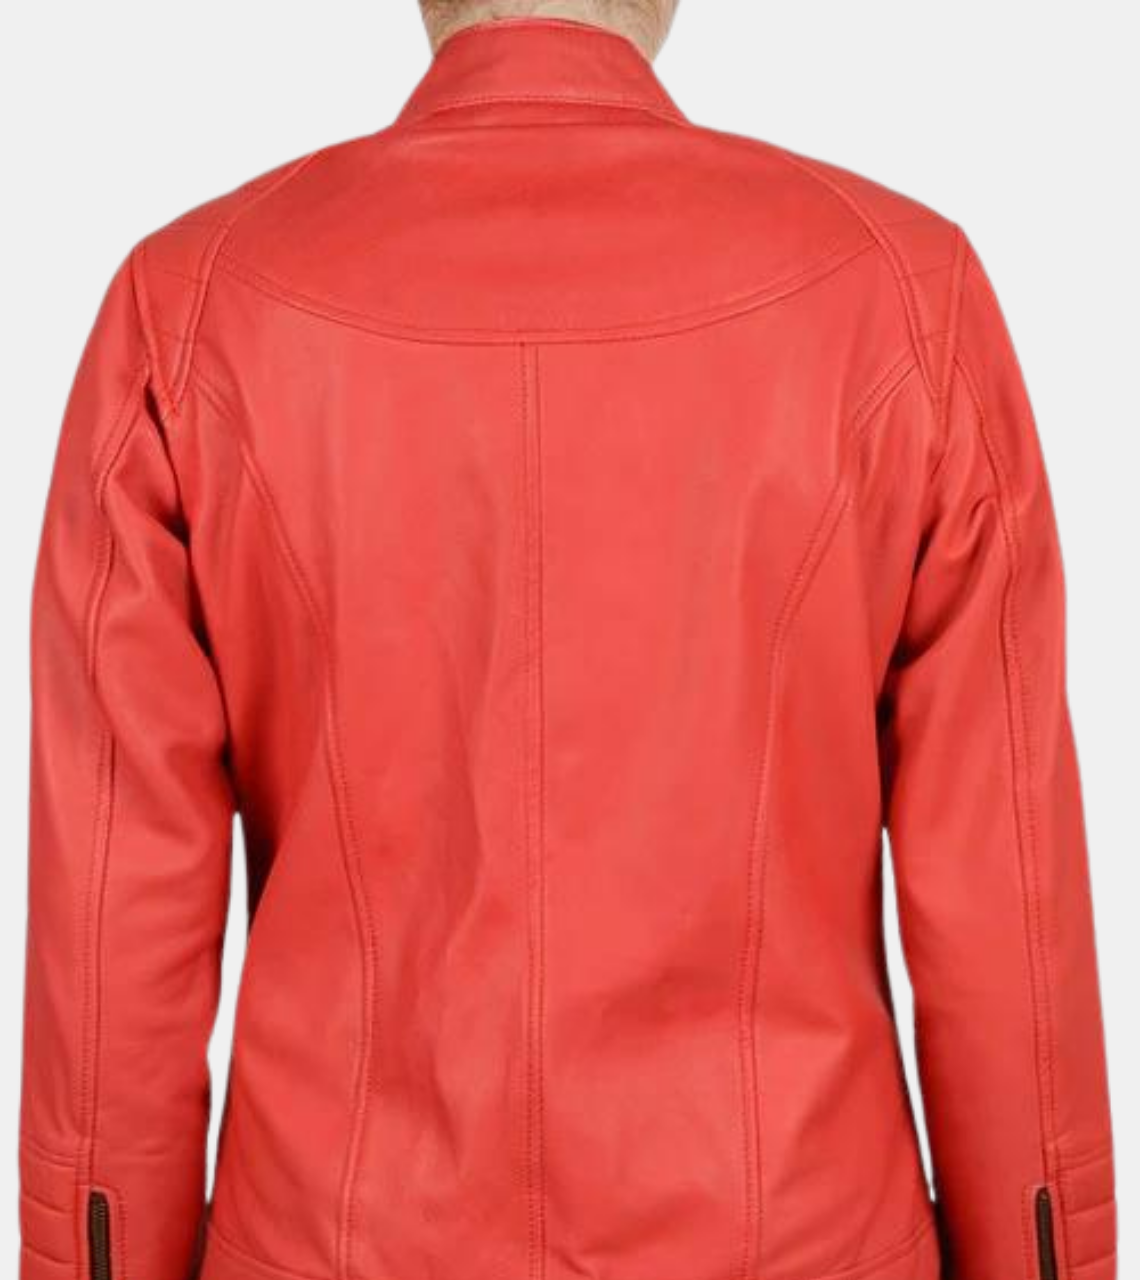 Windsor Women's Red Leather Jacket Back